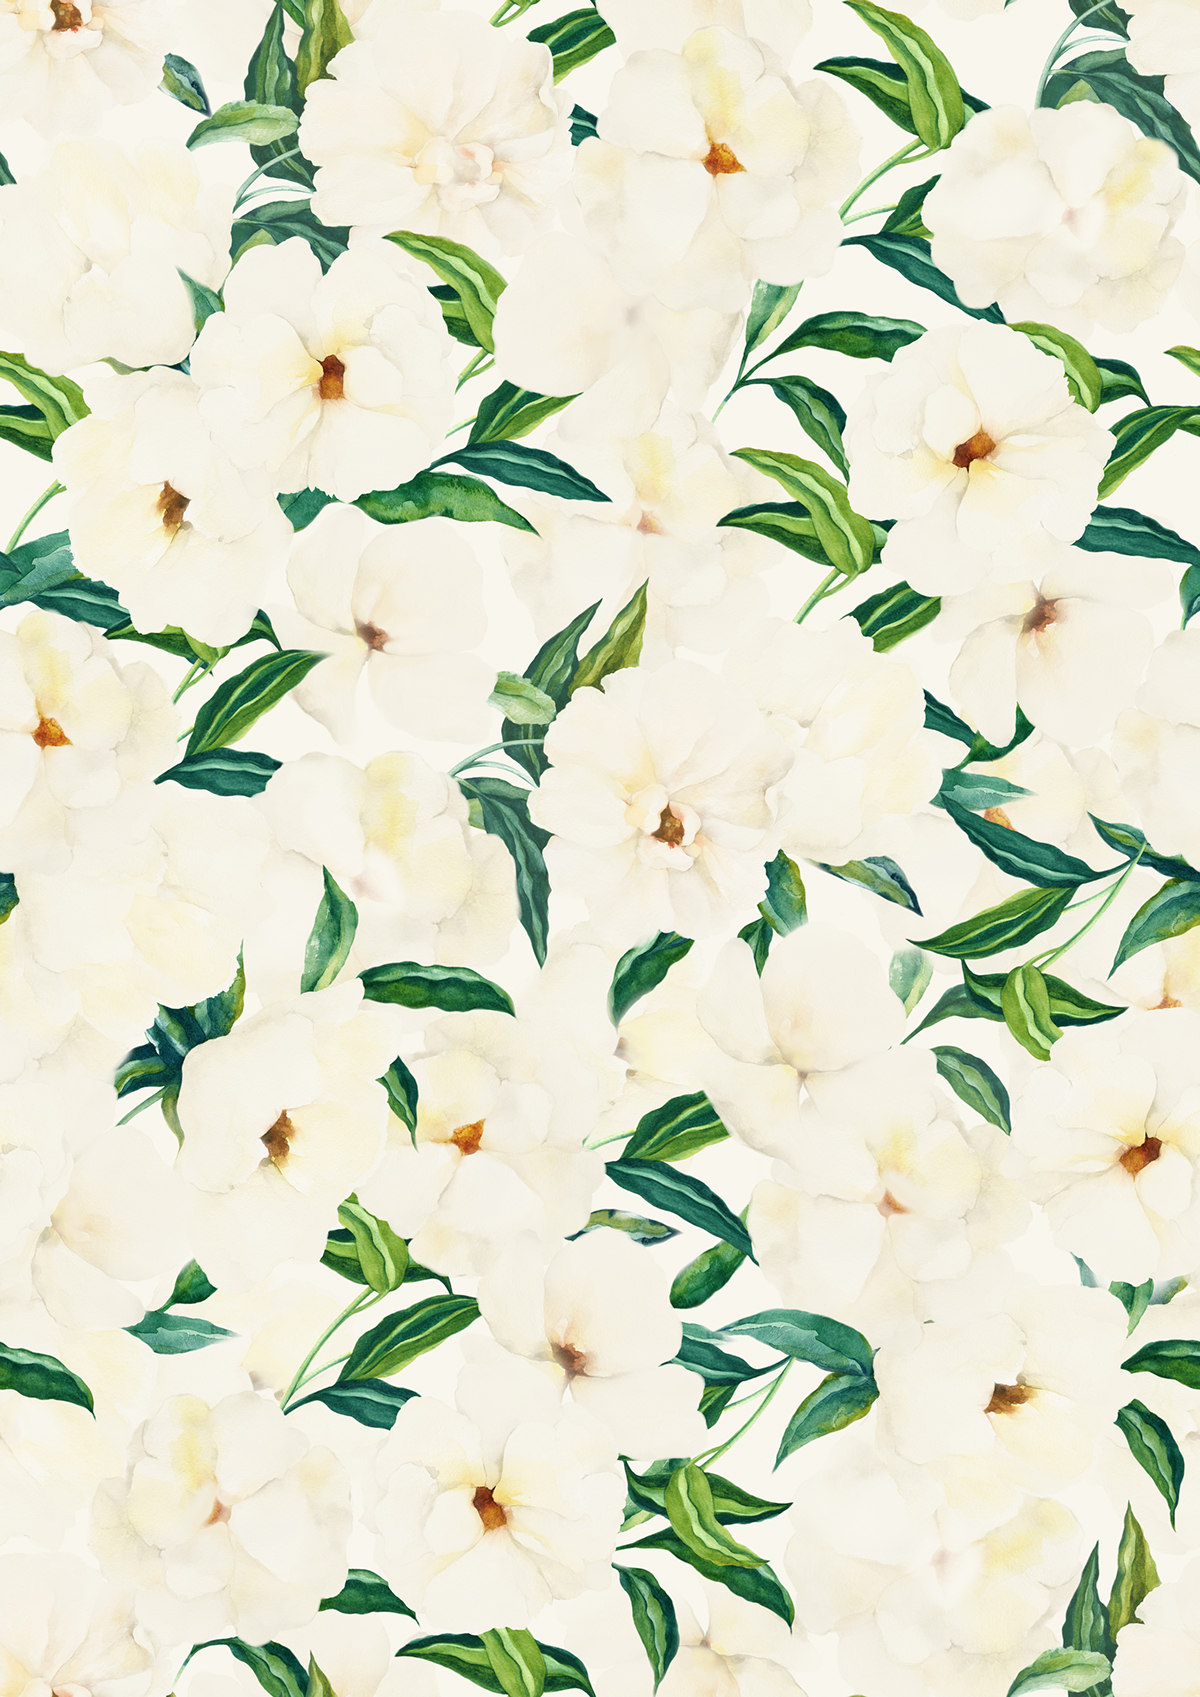 Flowers watercolor prints pattern textile fabric graphic design